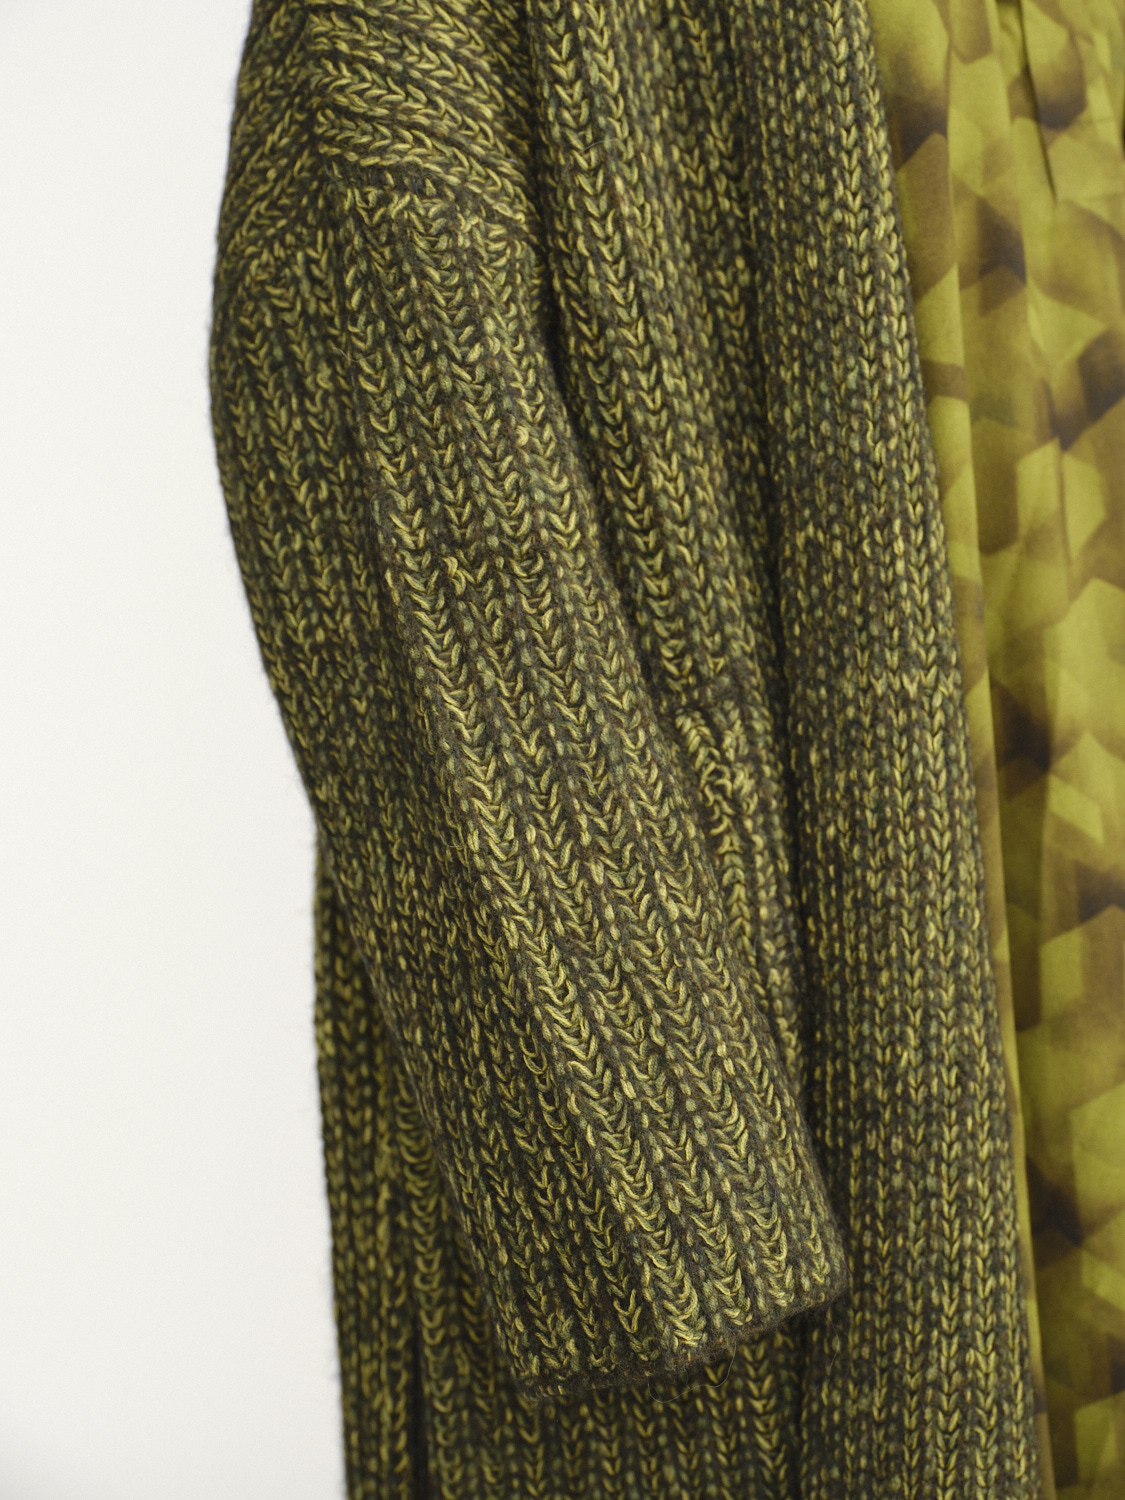 Odeeh Chunky knit oversized wool cardigan green S